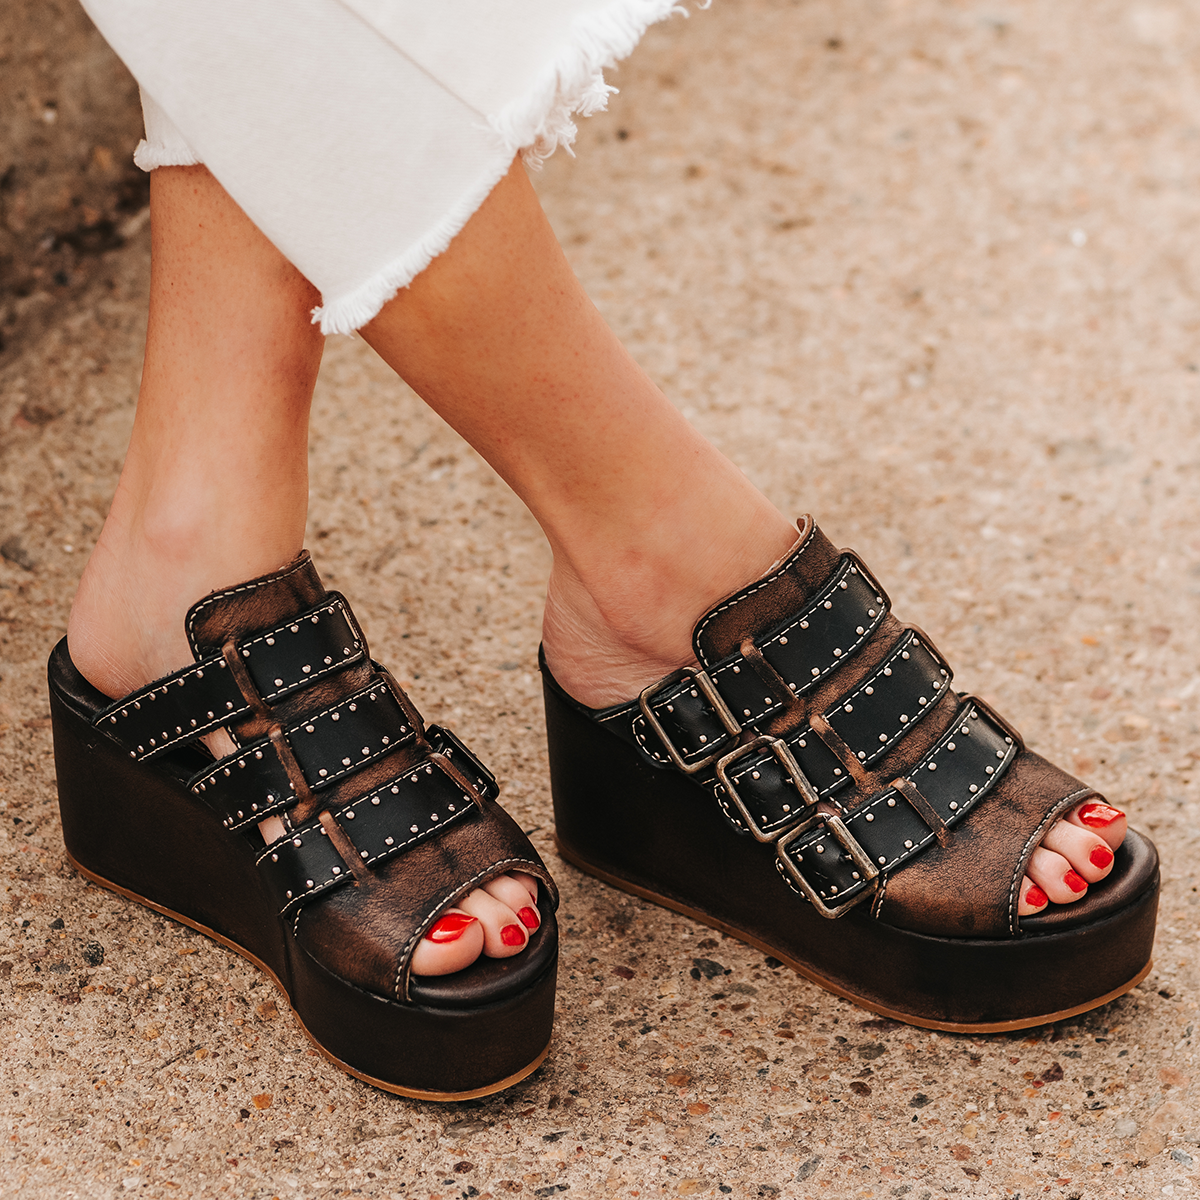 FREEBIRD women's Landi black slip-on sandal with adjustable straps and platform heel